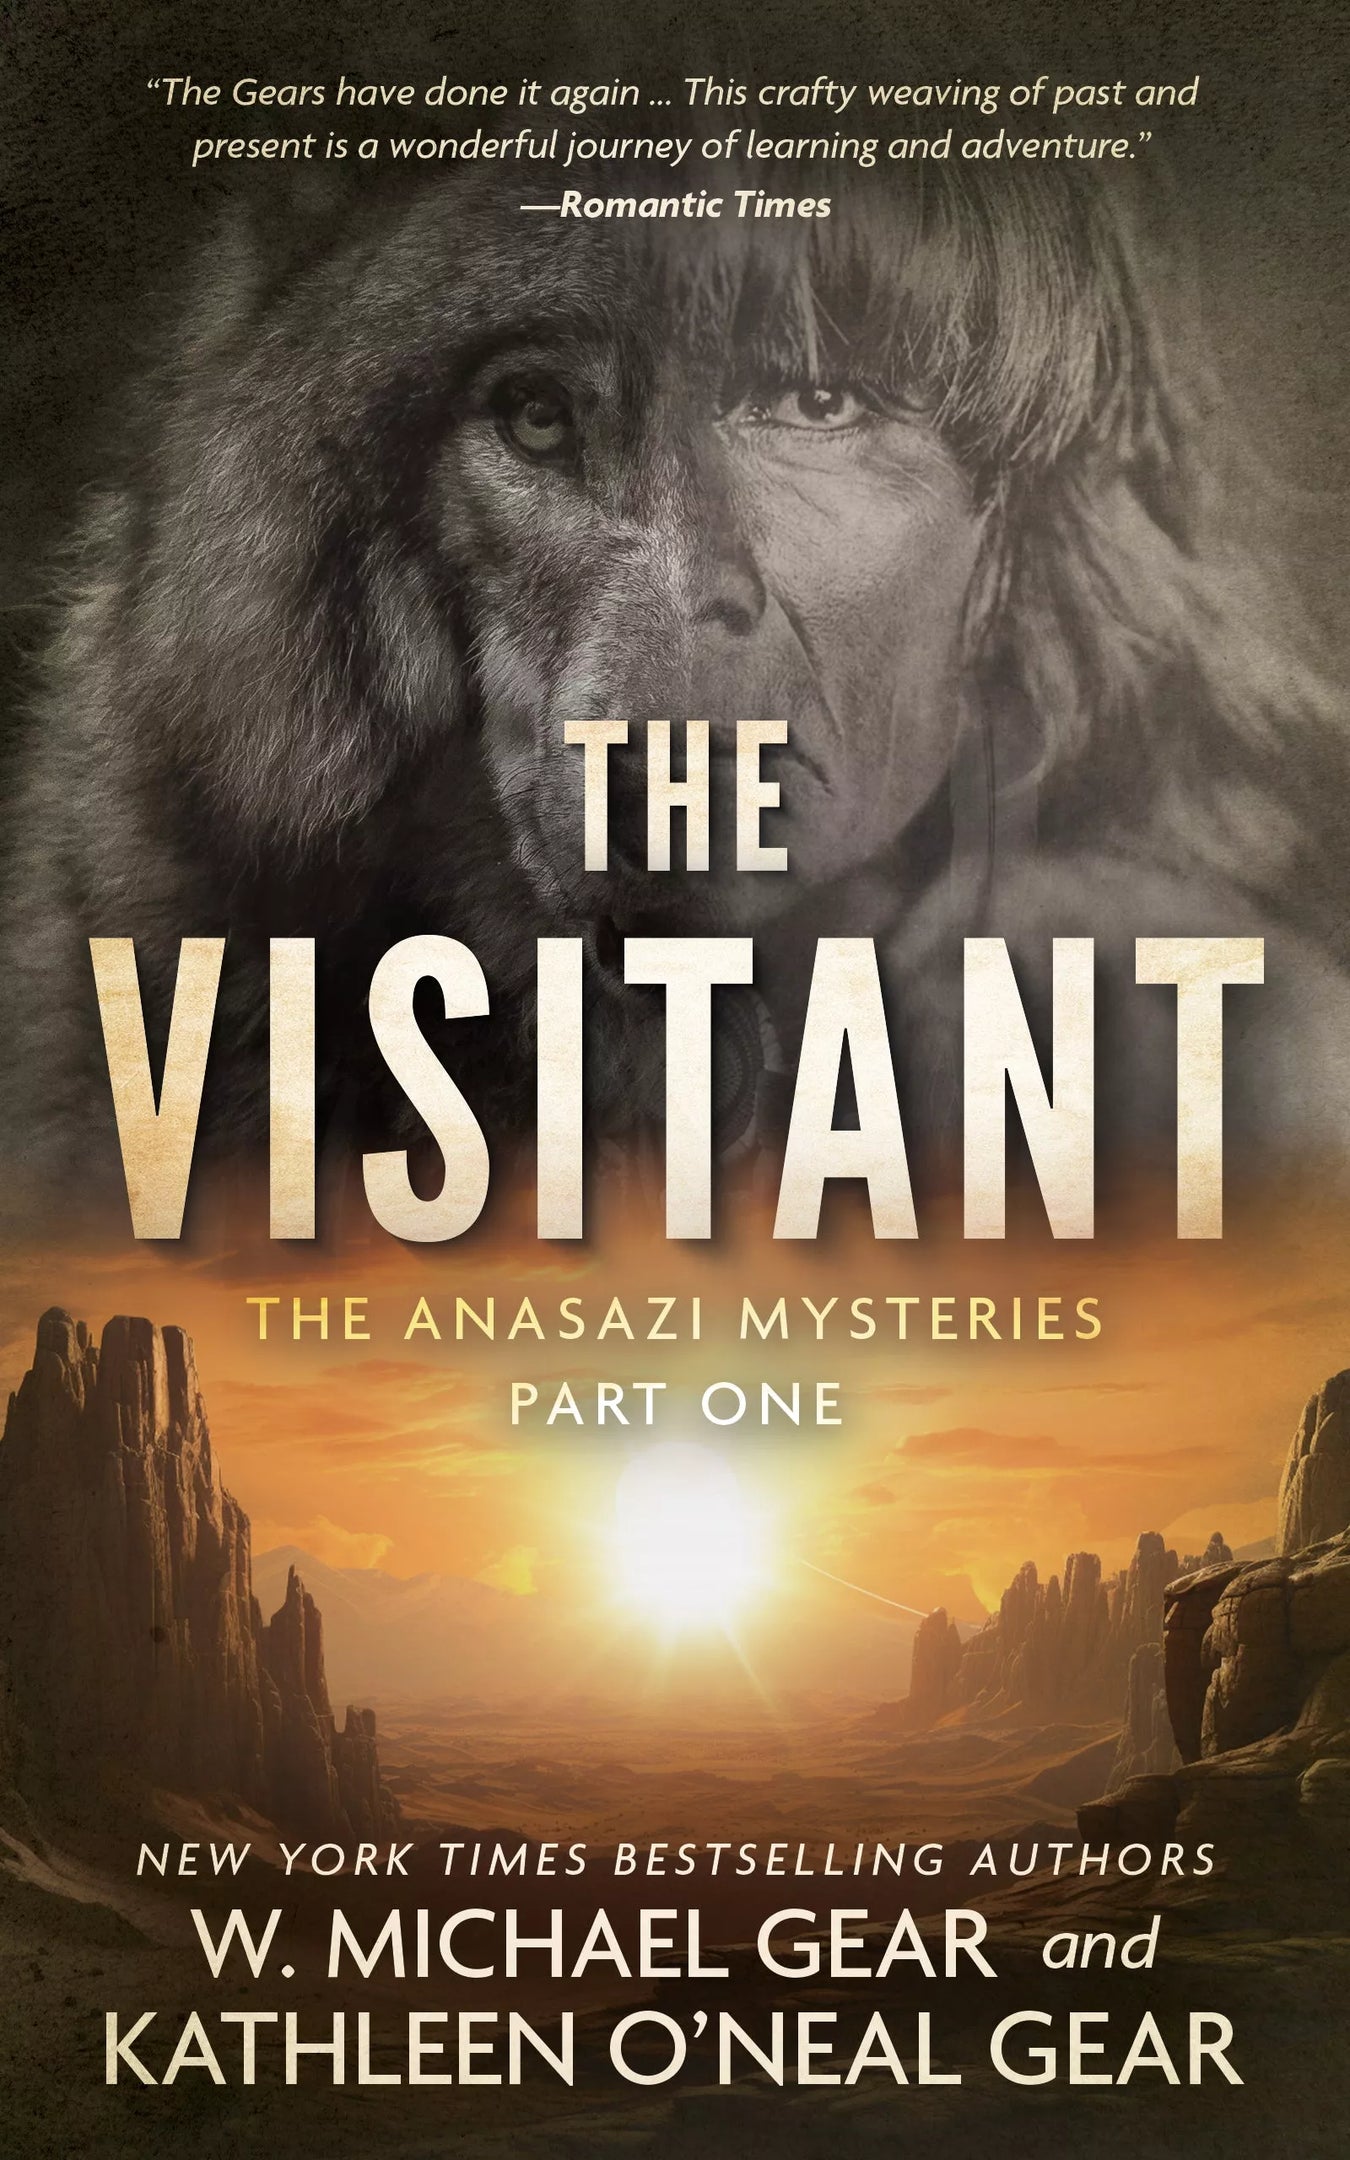 The Anasazi Mysteries